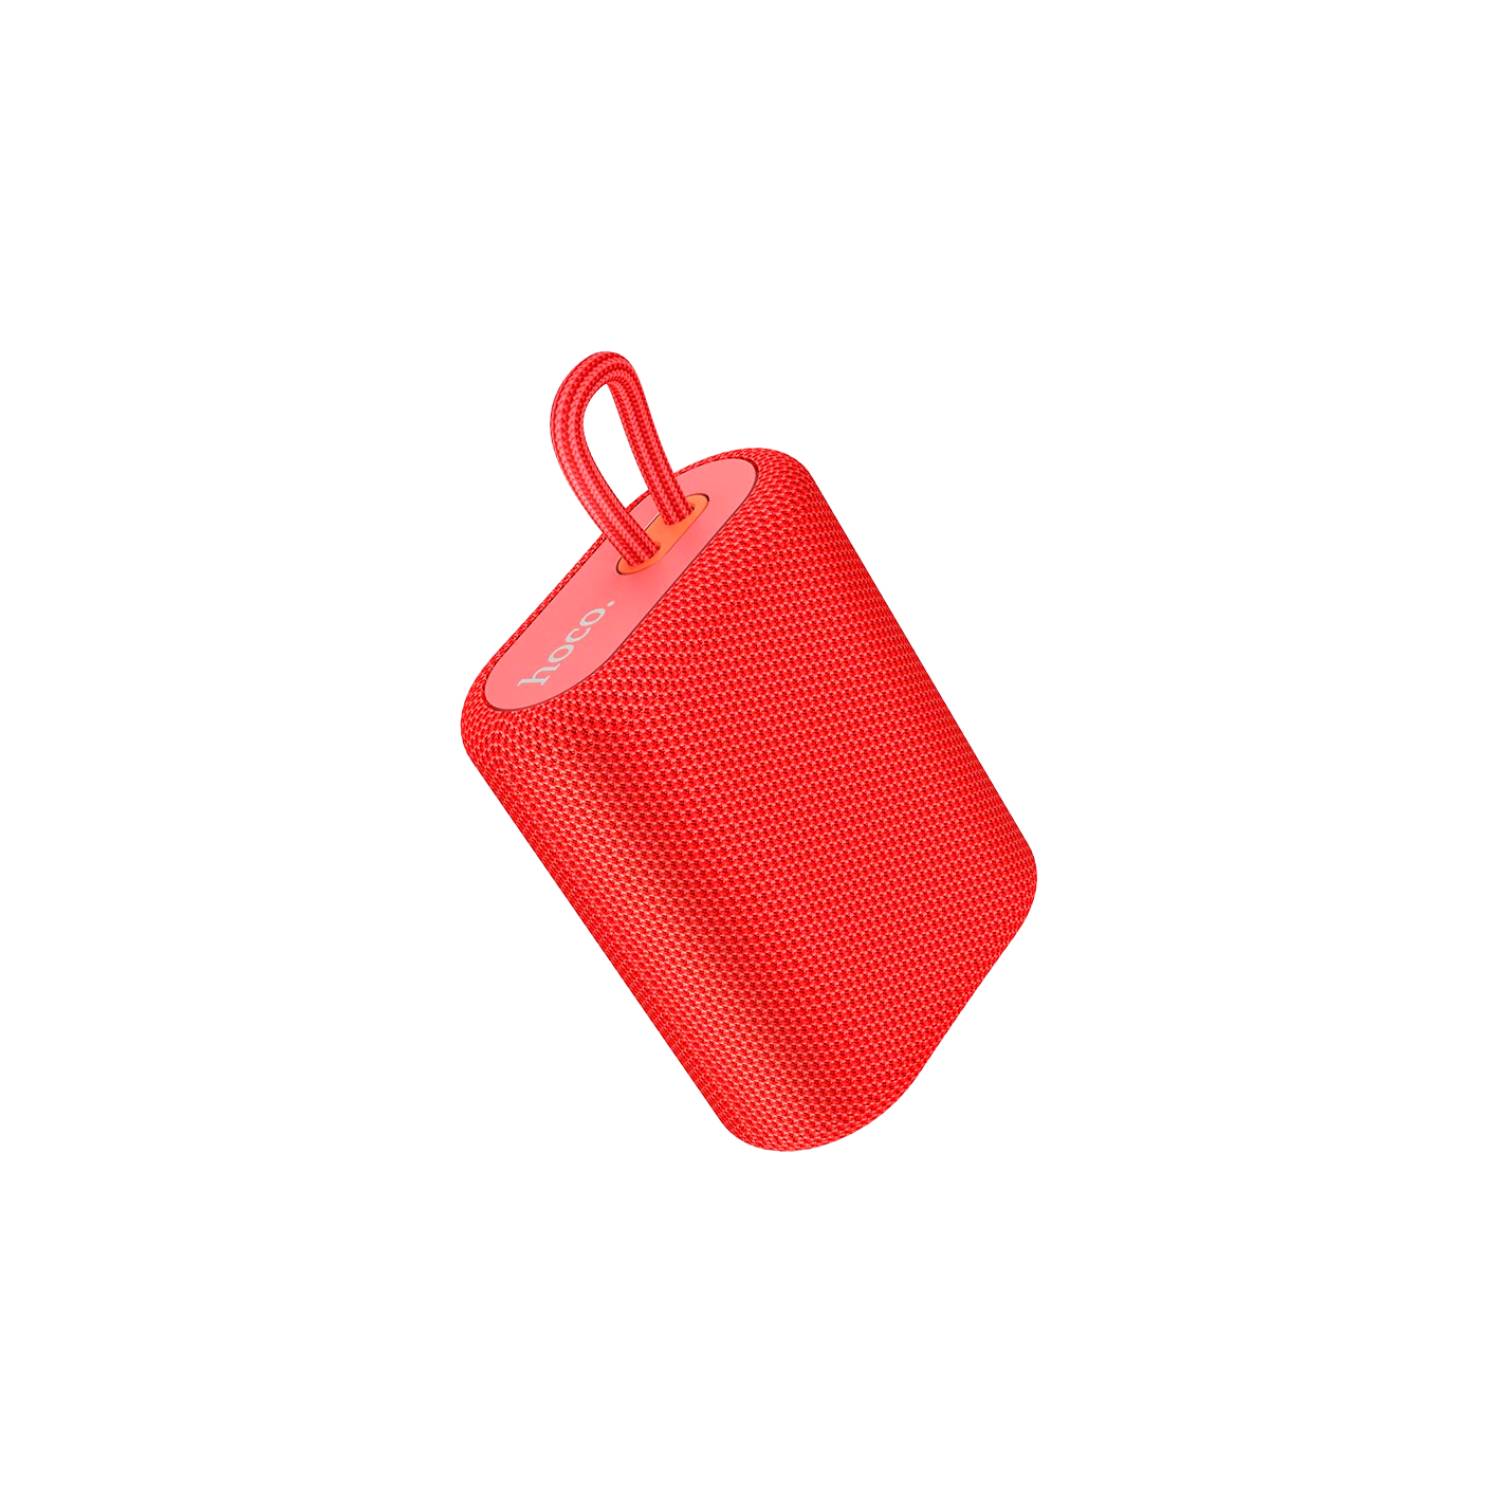 Altavoz Bluetooth Xiaomi MI Speaker 6W RMS Rojo